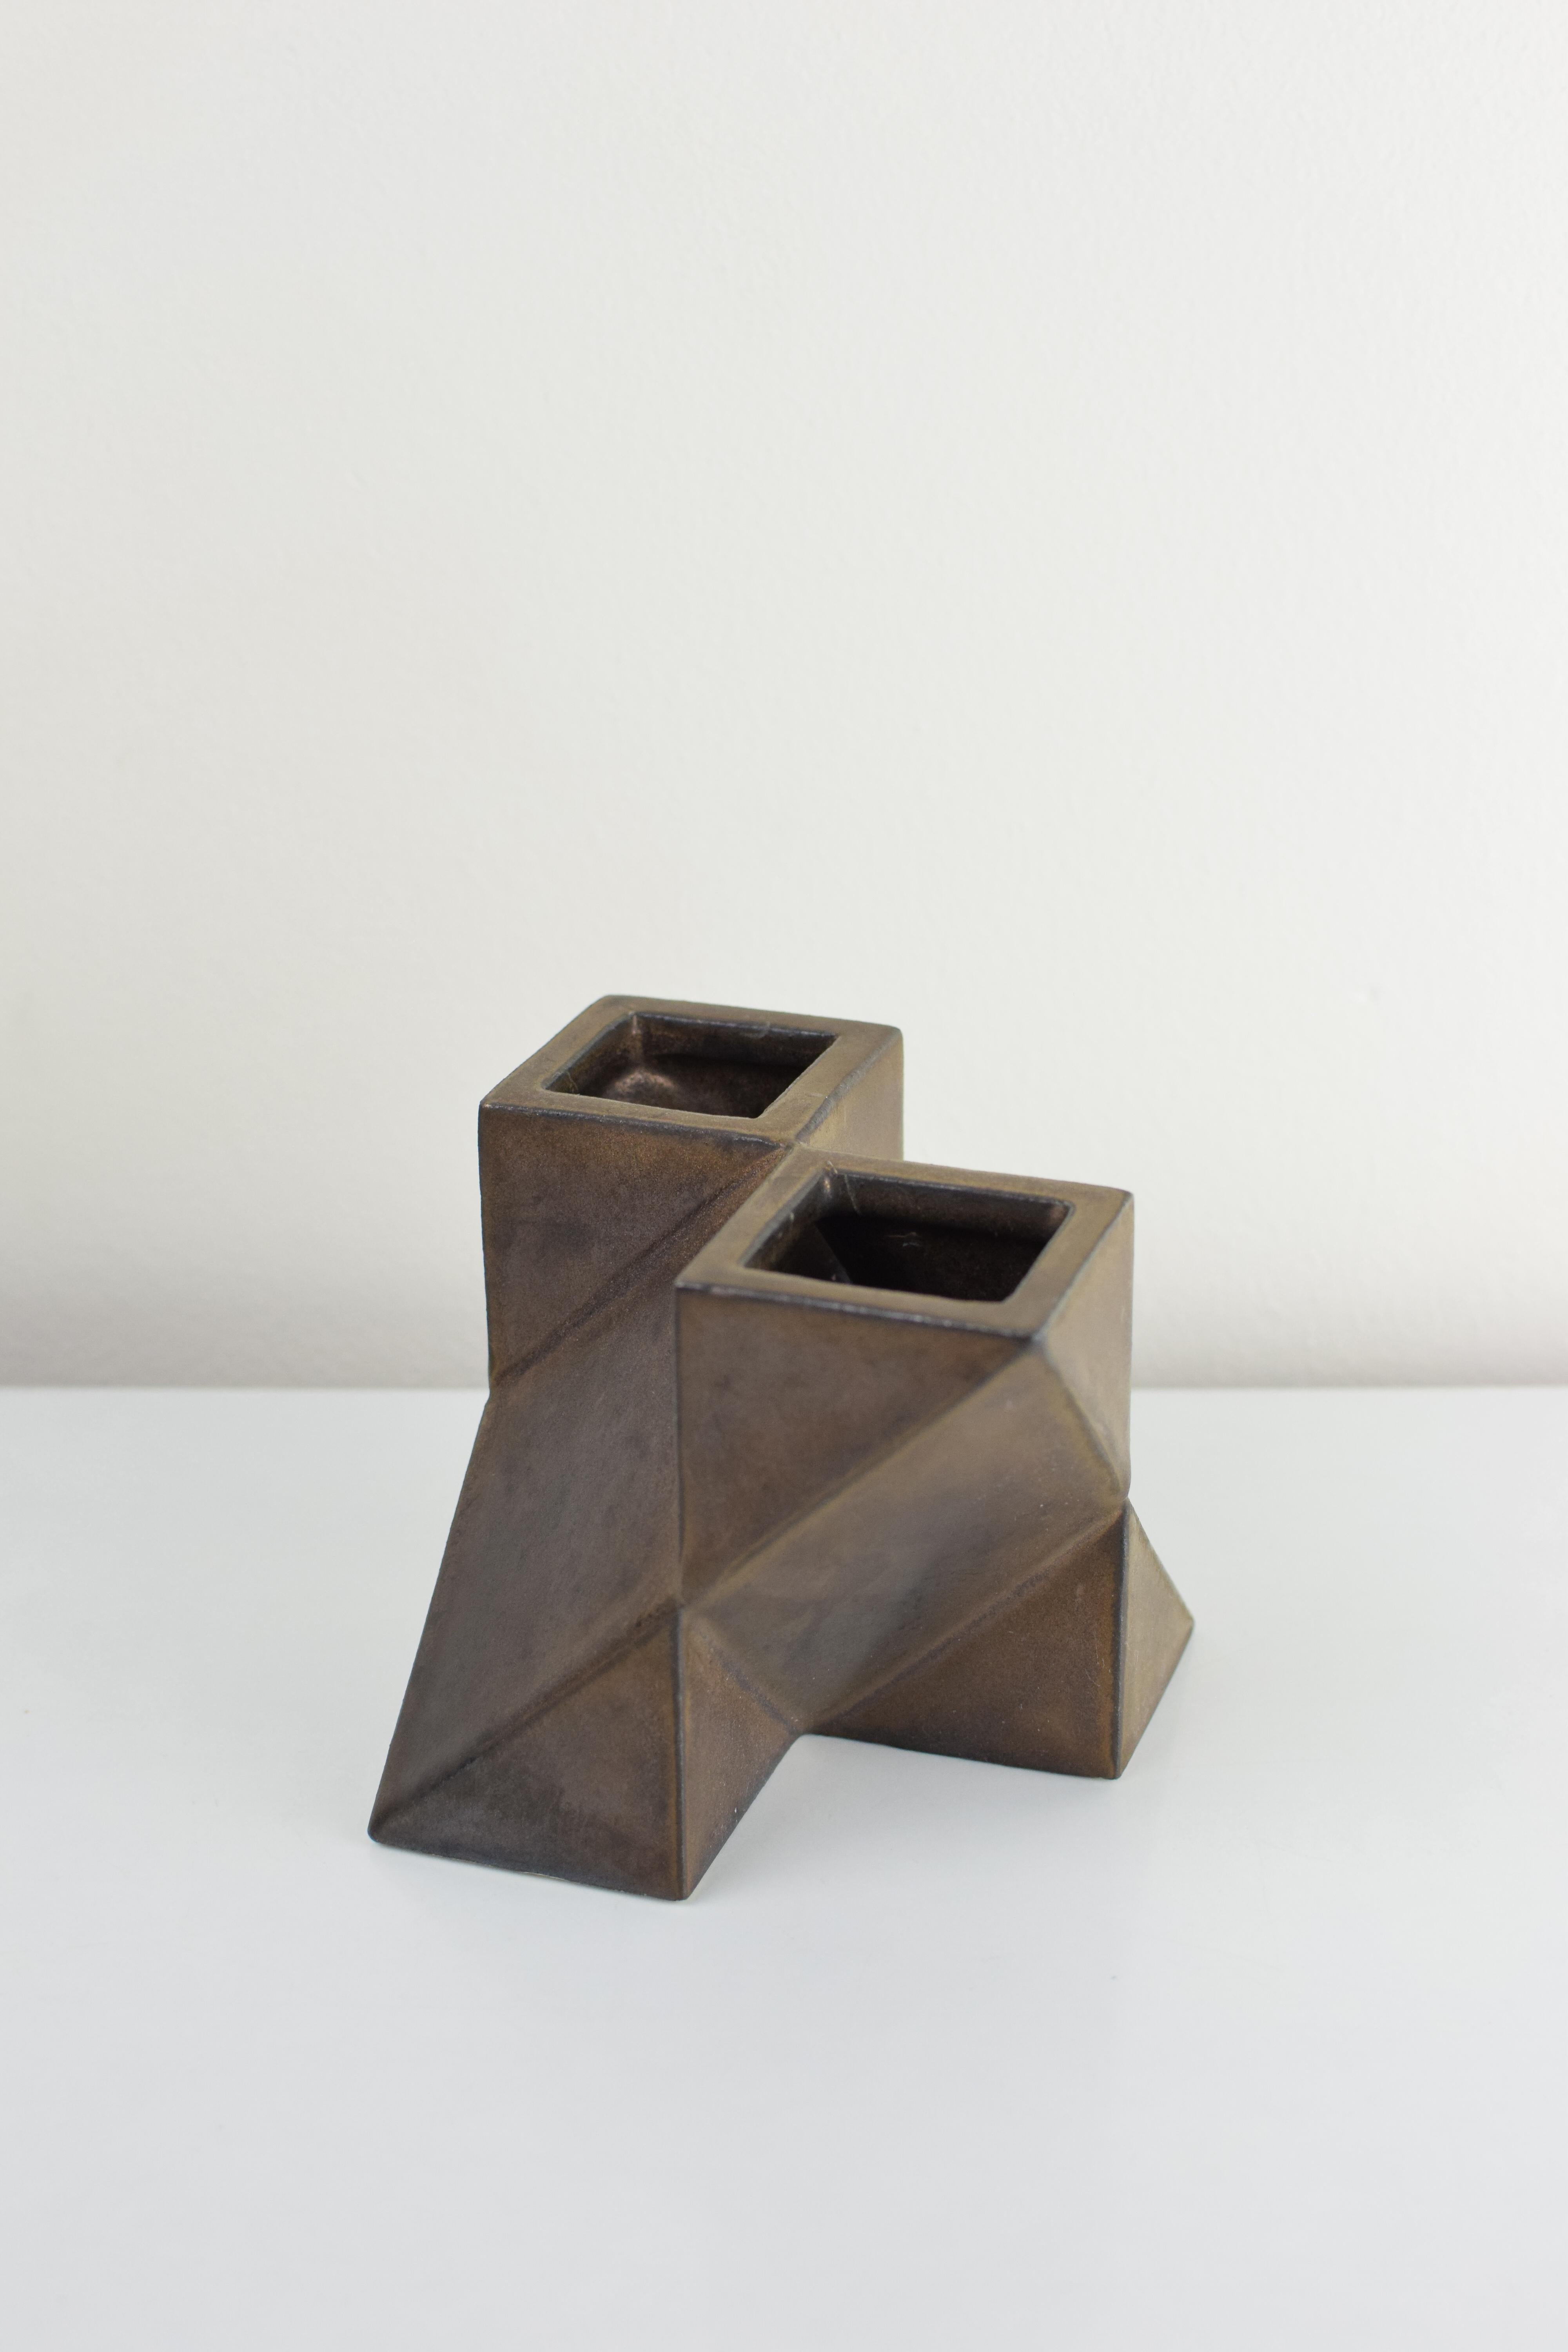 Steel Vase by Van Der Vaart